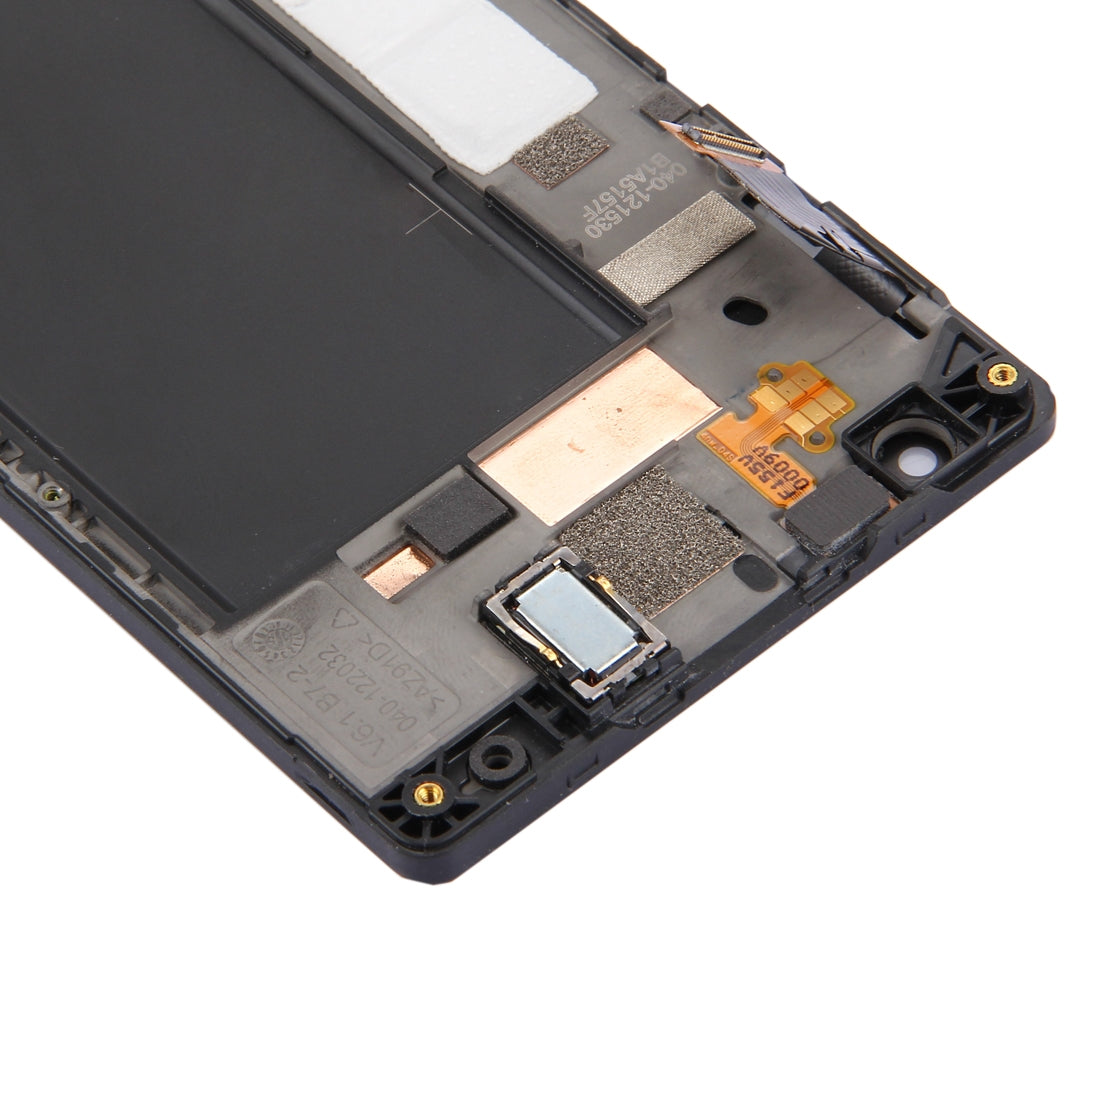 Pantalla Completa LCD + Tactil + Marco Nokia Lumia 735 Negro